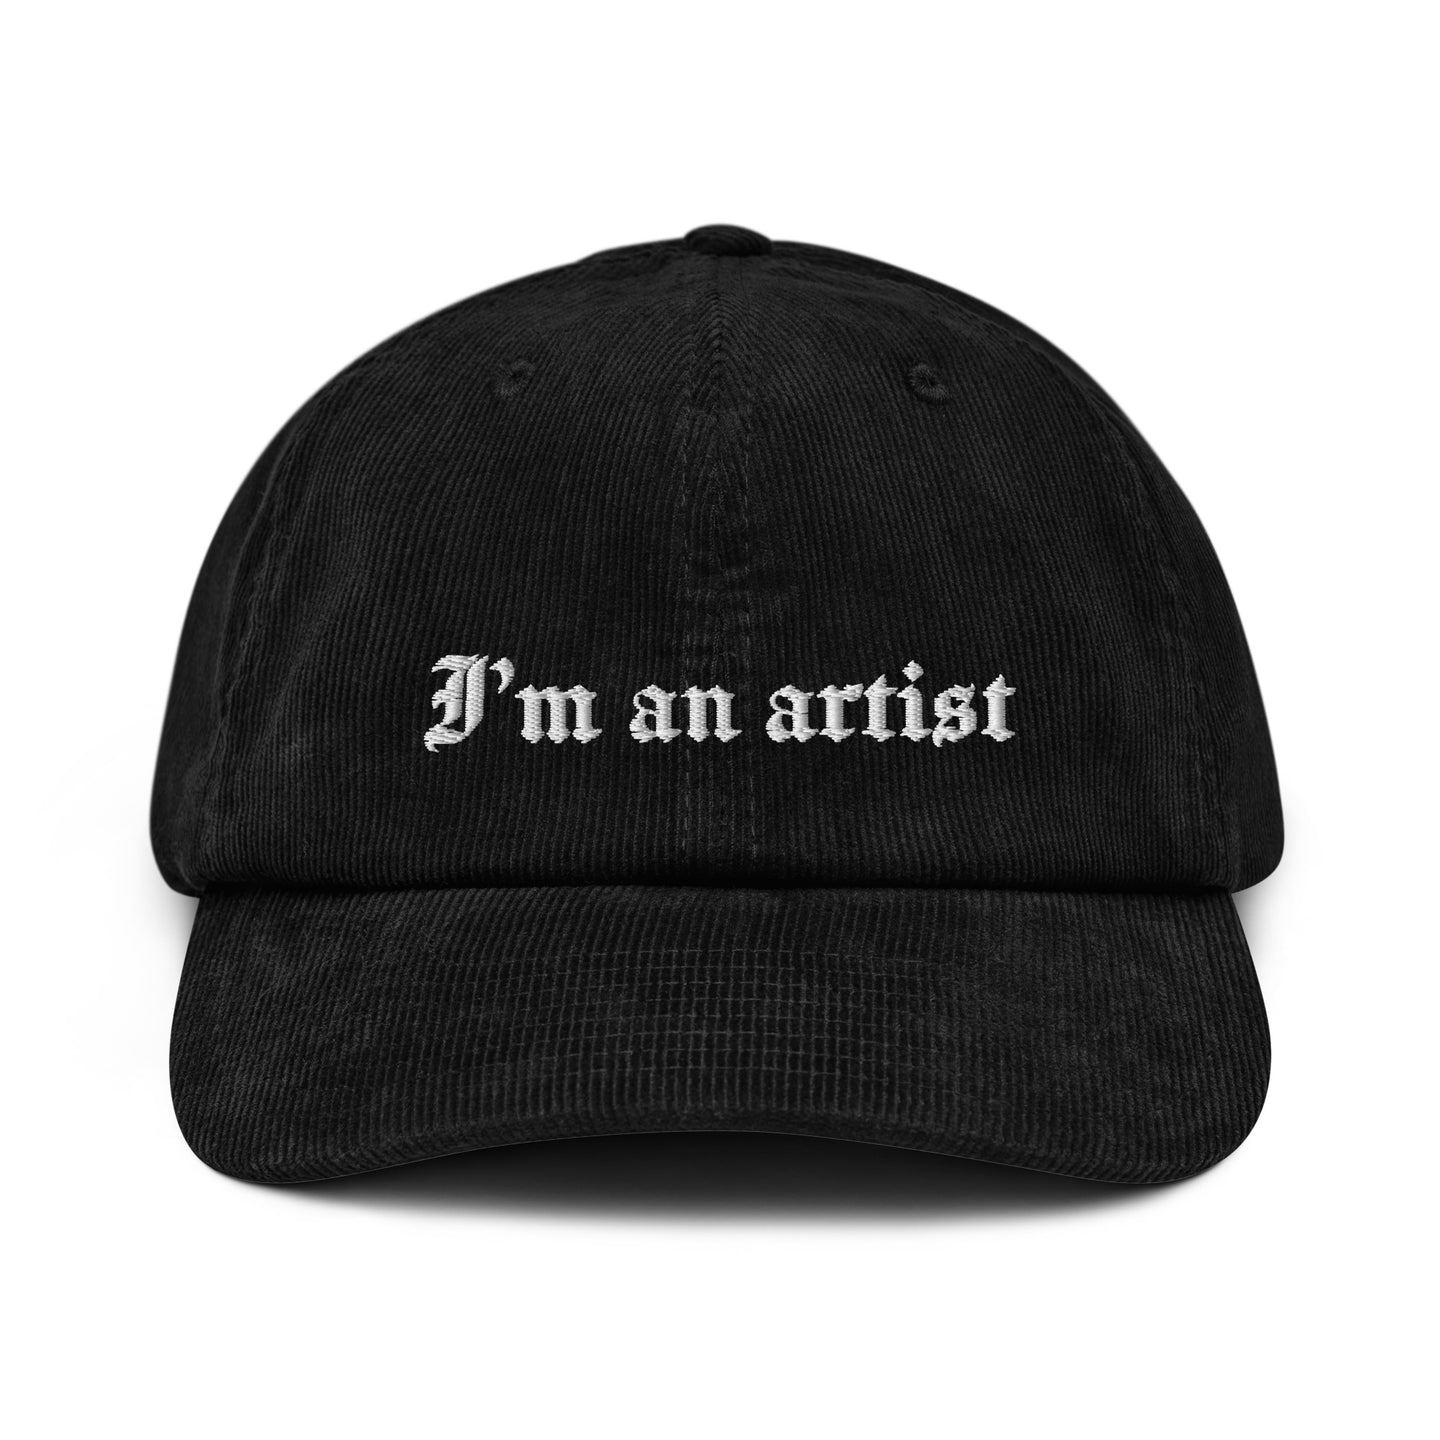 Corduroy Hat - I'm an artist